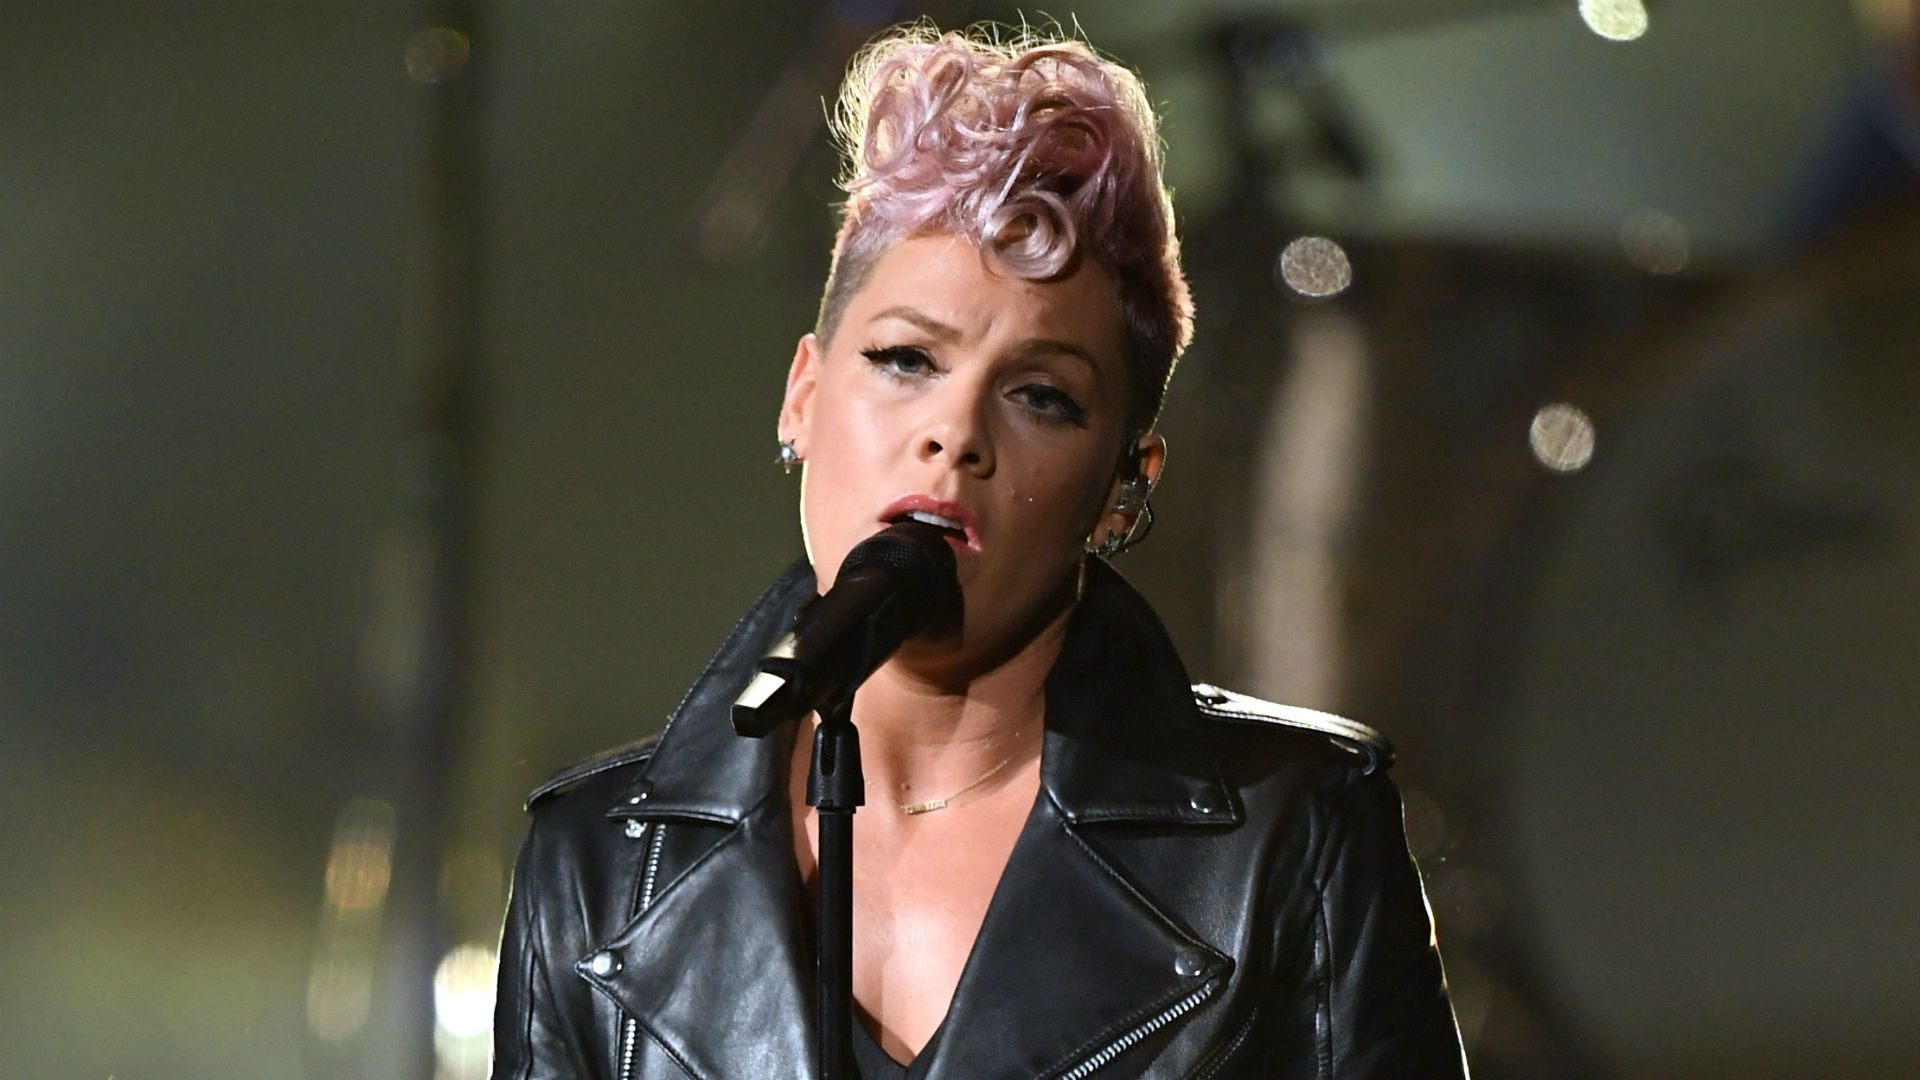 Pink to perform national anthem at Super Bowl 52